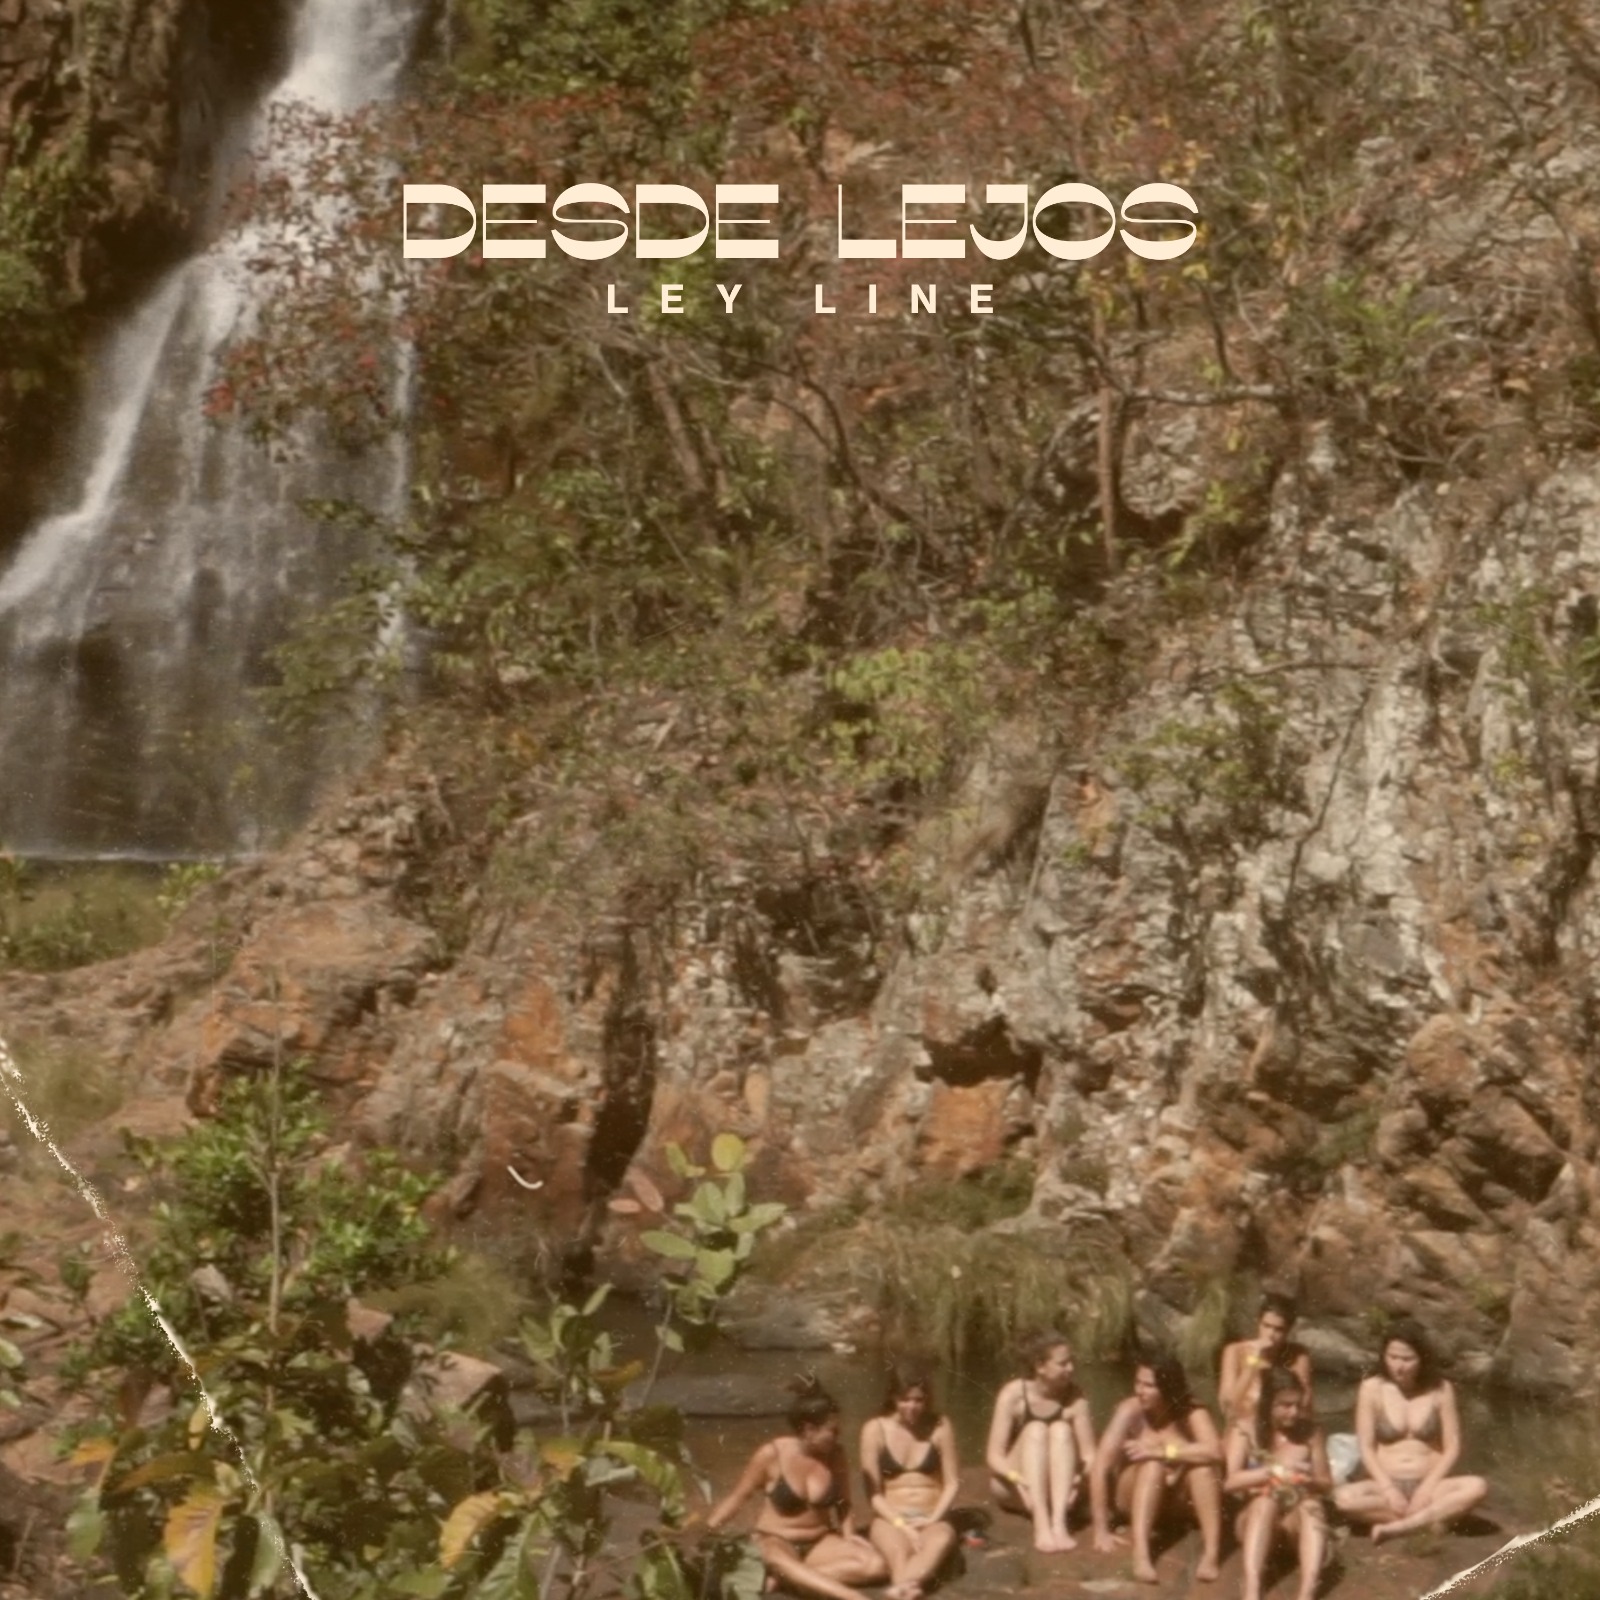 Folk Fusion Group Ley Line Announce New Single 'Desde Lejos'